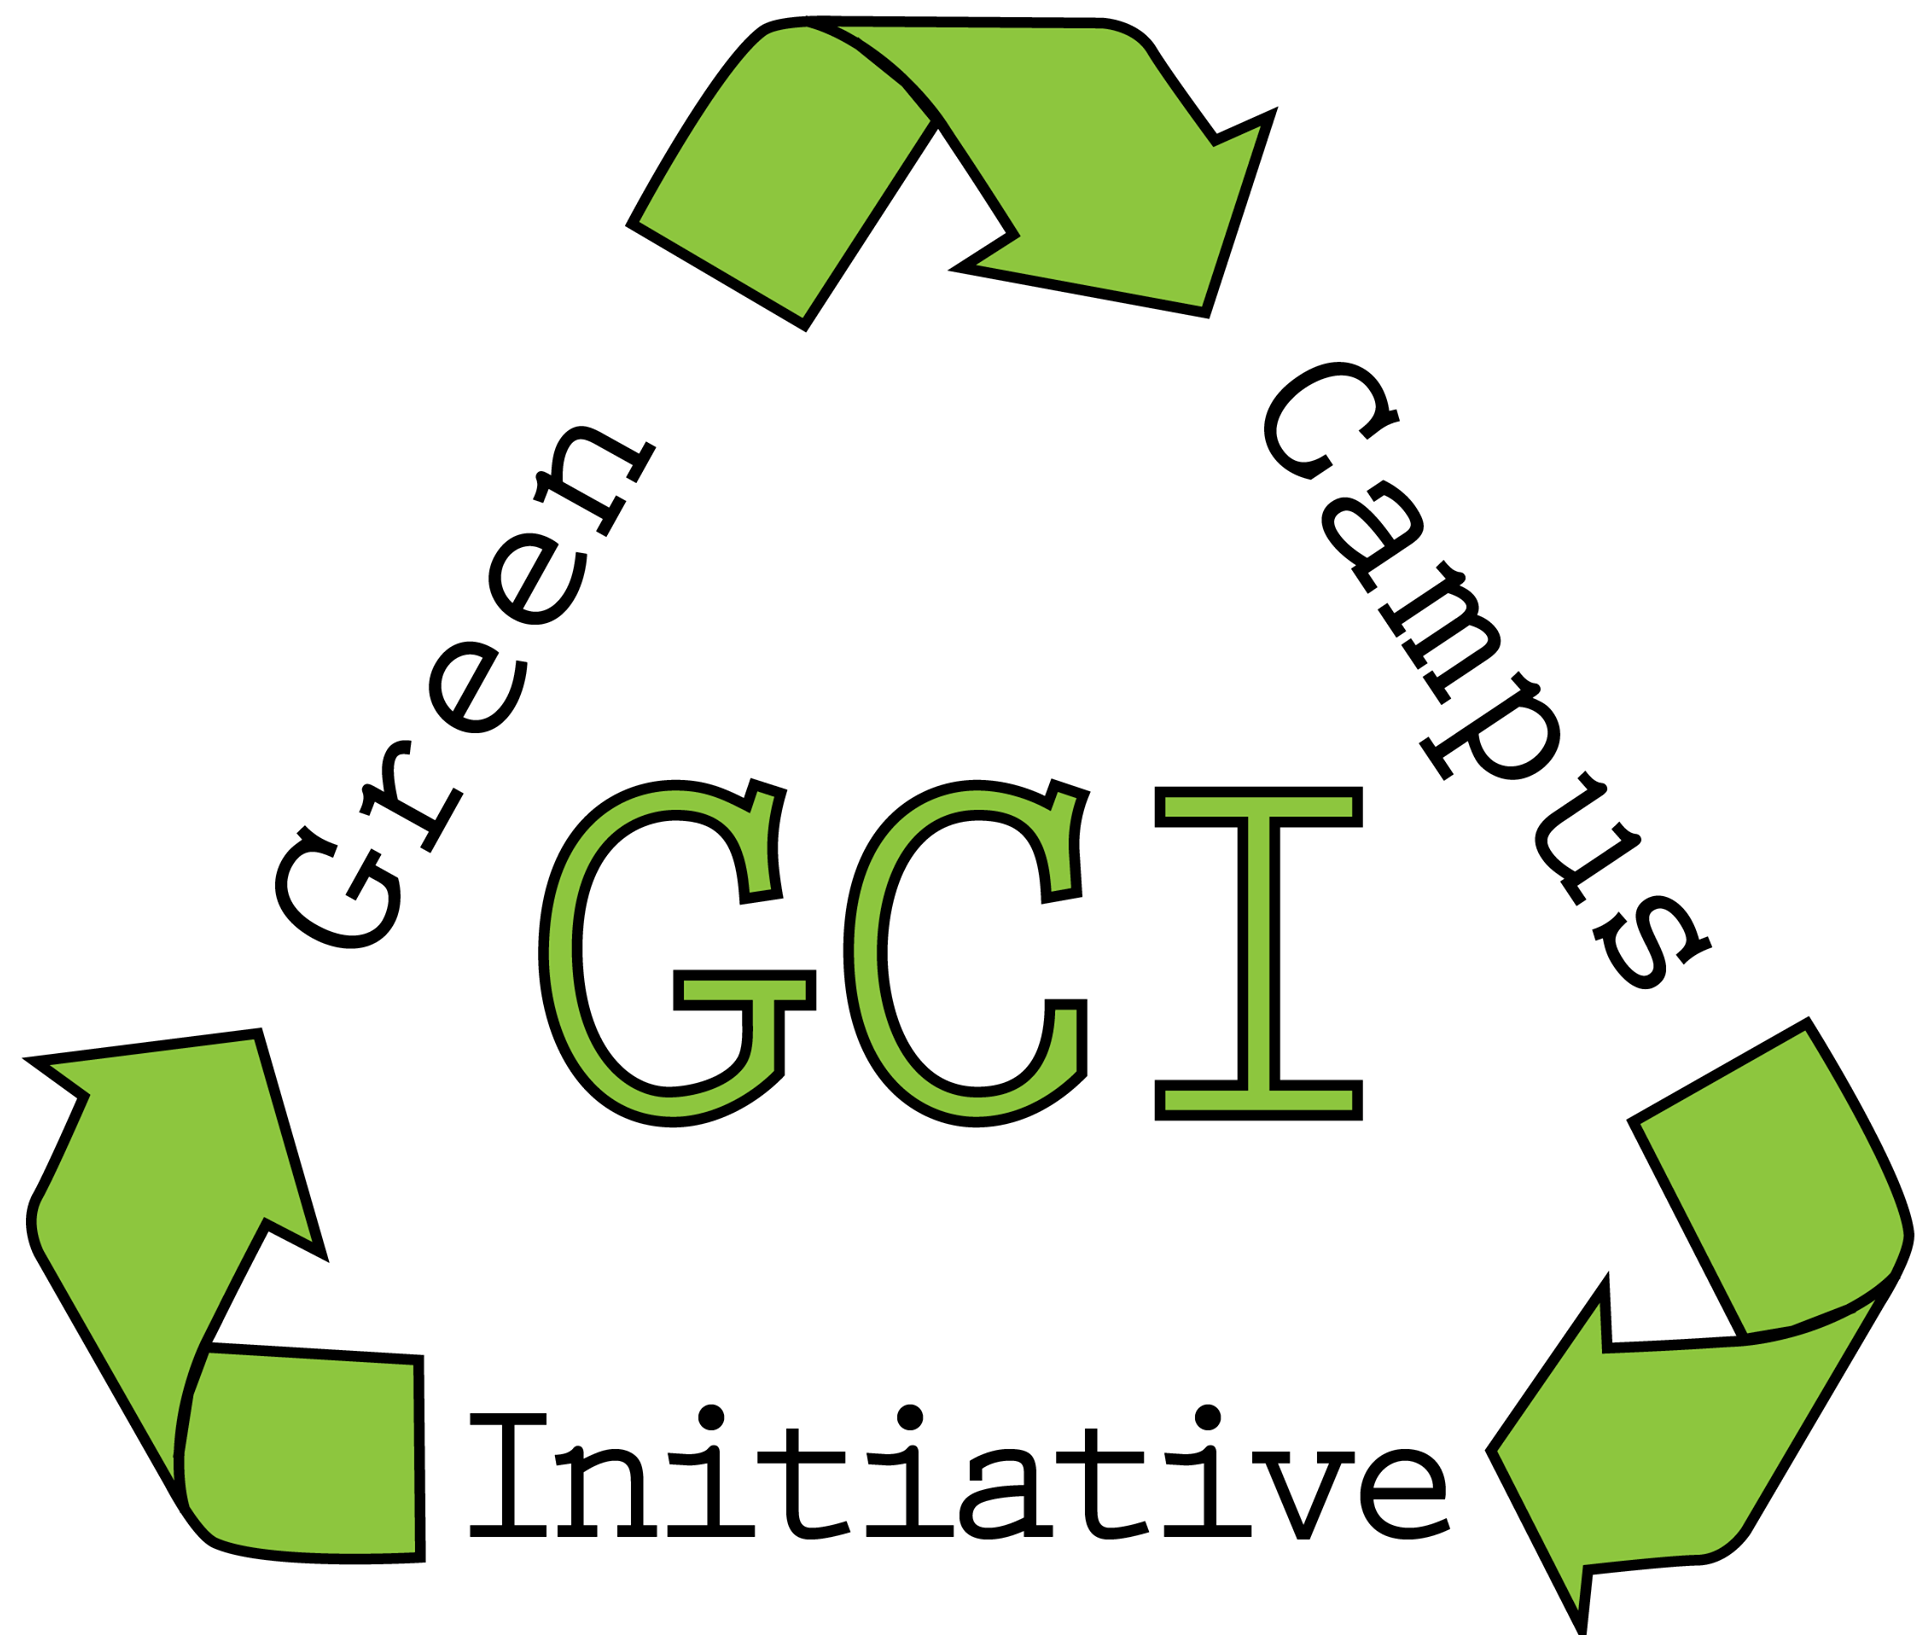 Green Campus Initiative logo: Light green chasing arrows arranged like the triangular recycling symbol surround "GCI"